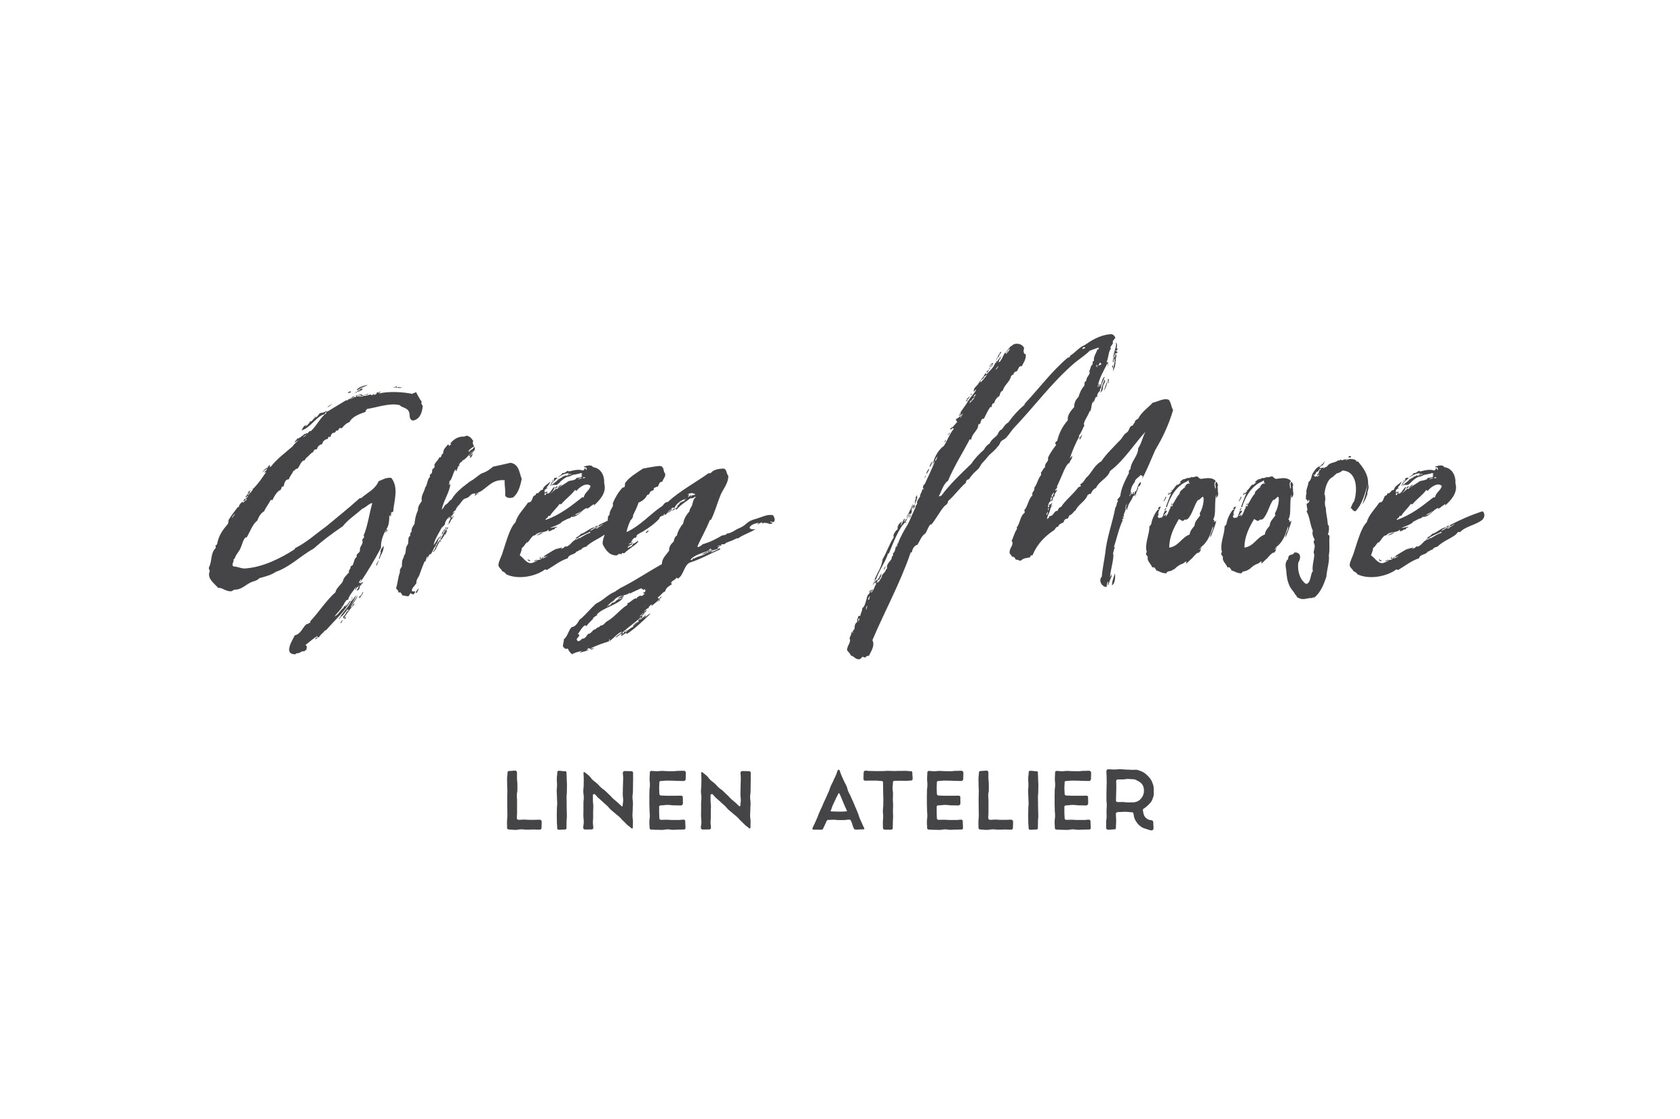 Grey Moose Linen Atelier